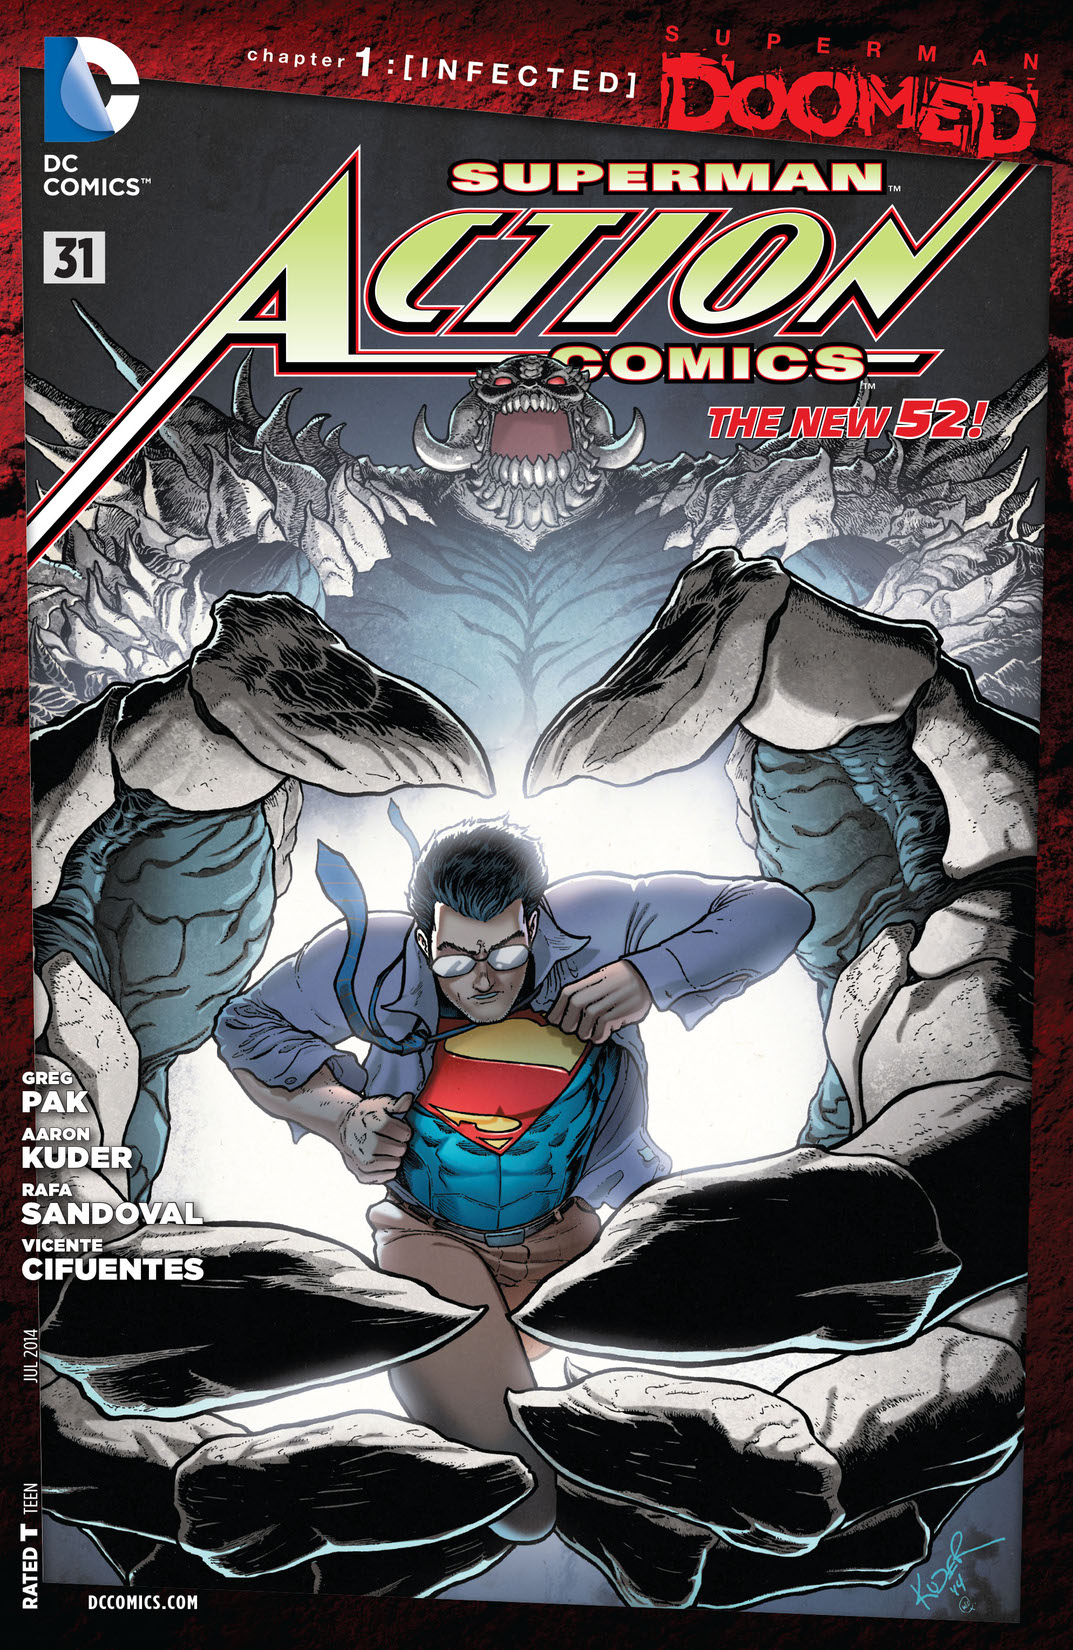 Action Comics (2011-) #31 preview images